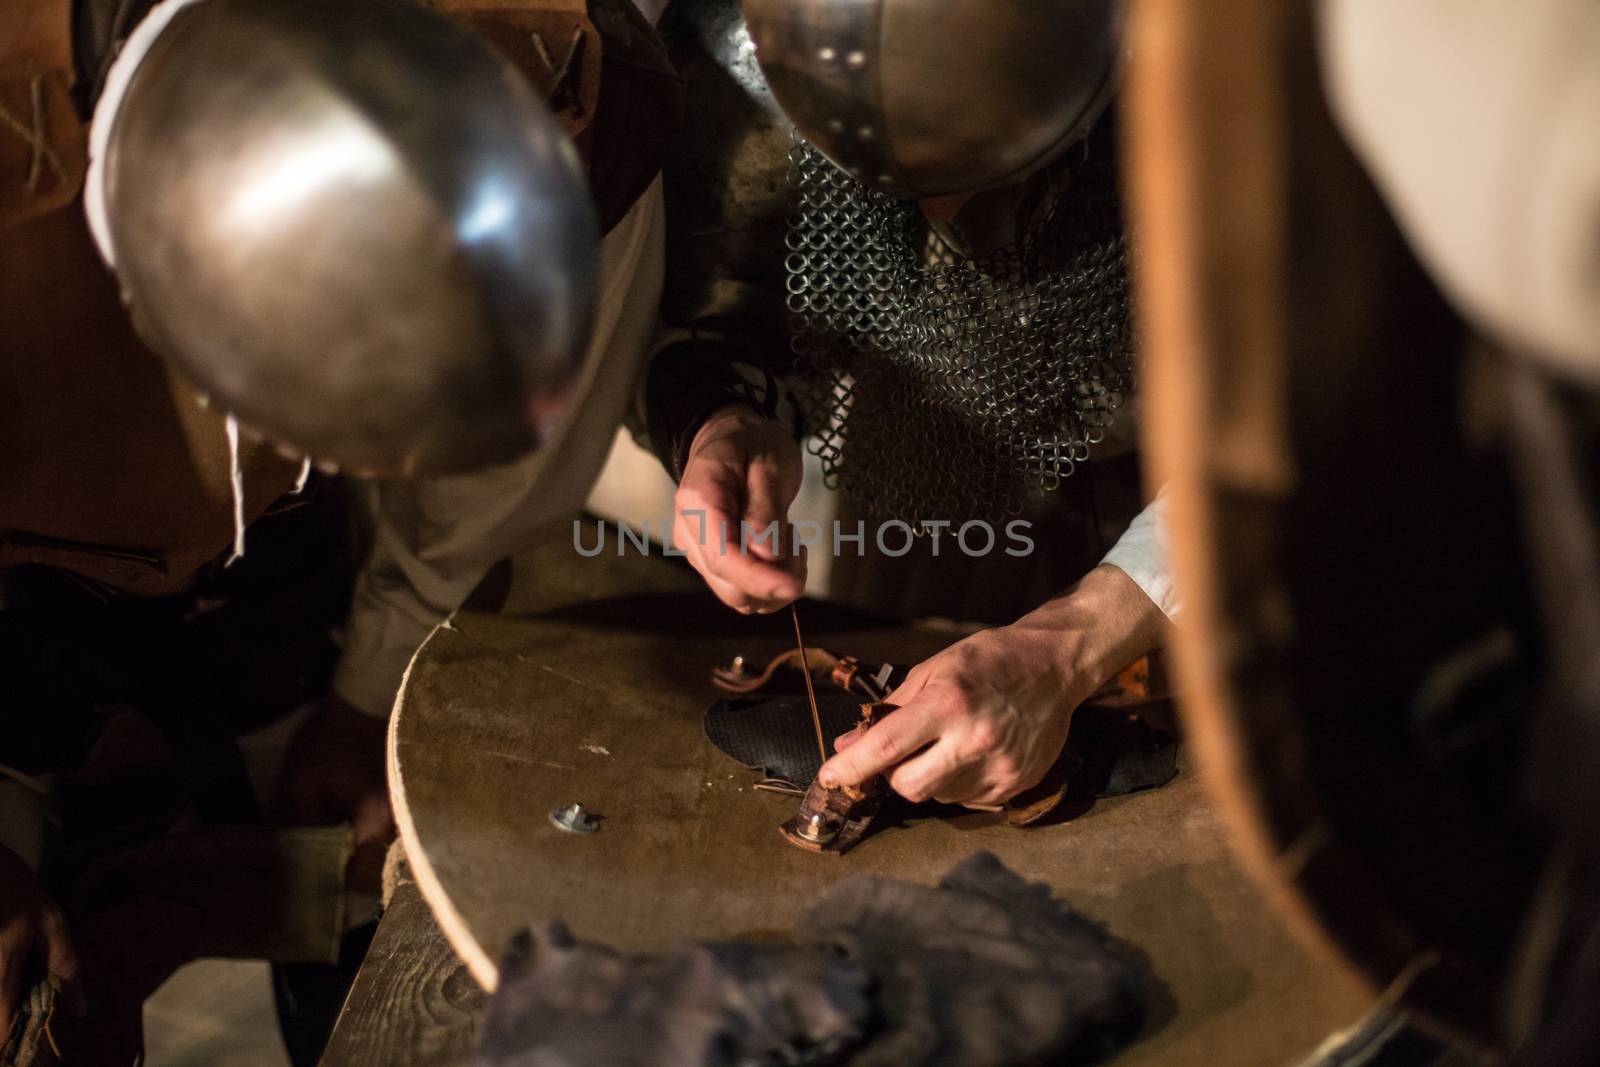 Artisans medieval times showing old crafts